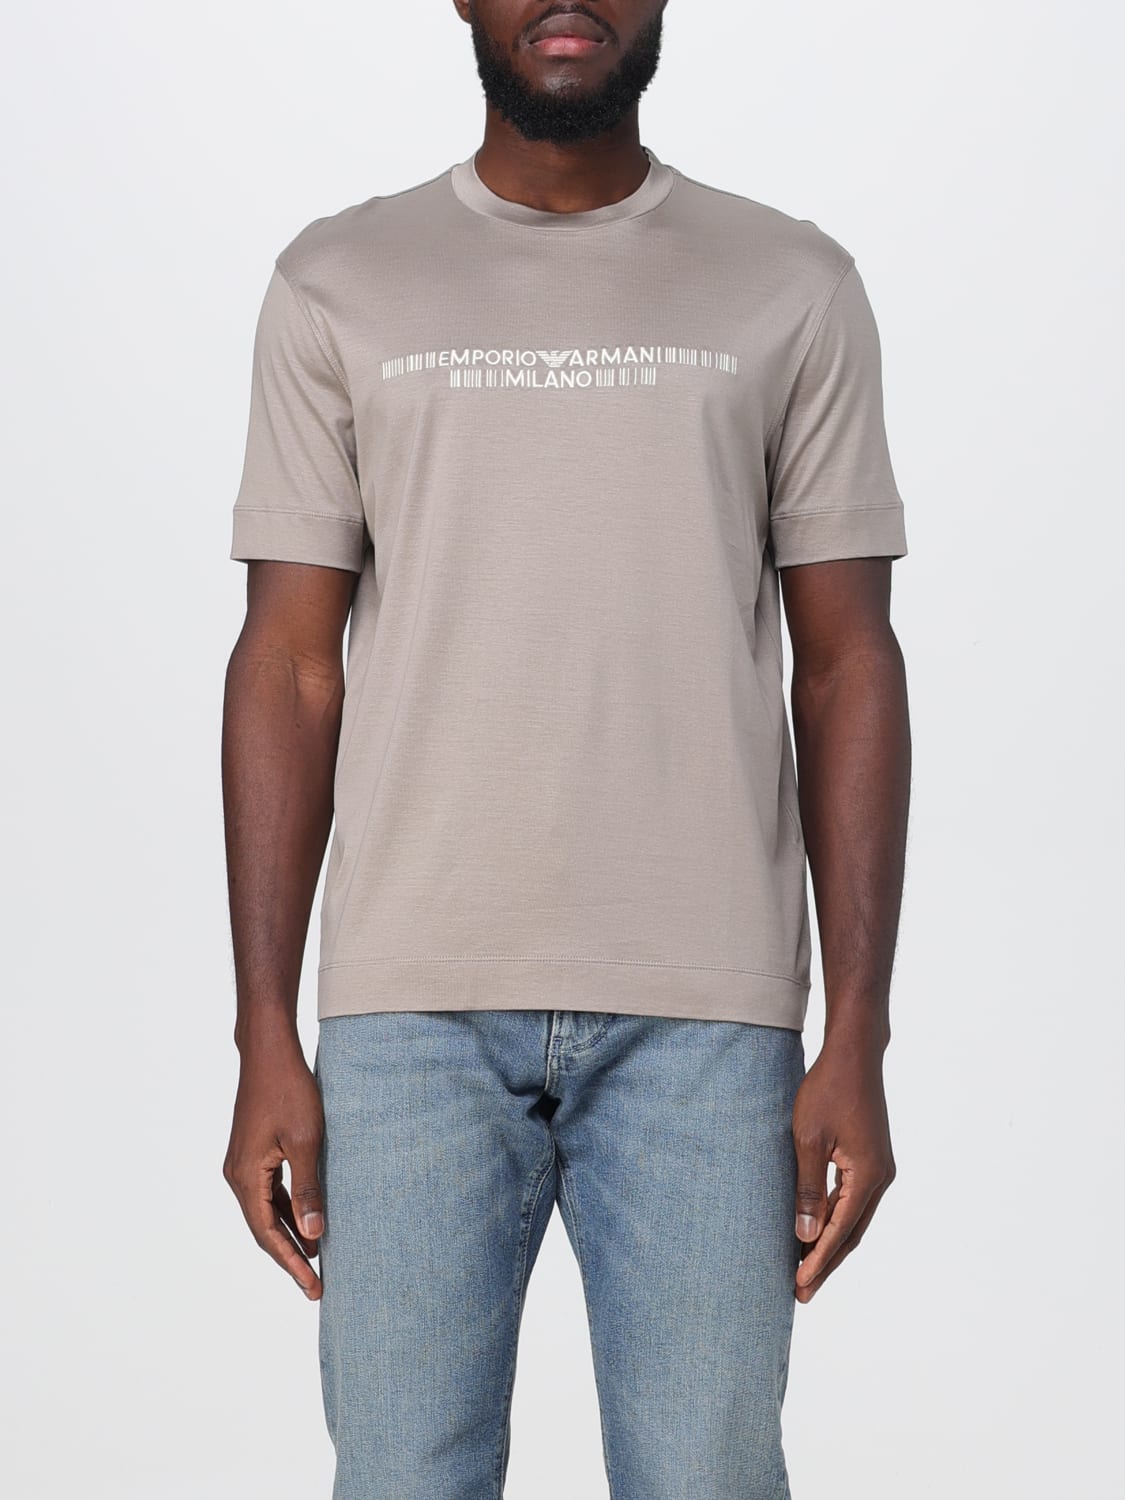 Emporio Armani Herren T-Shirt